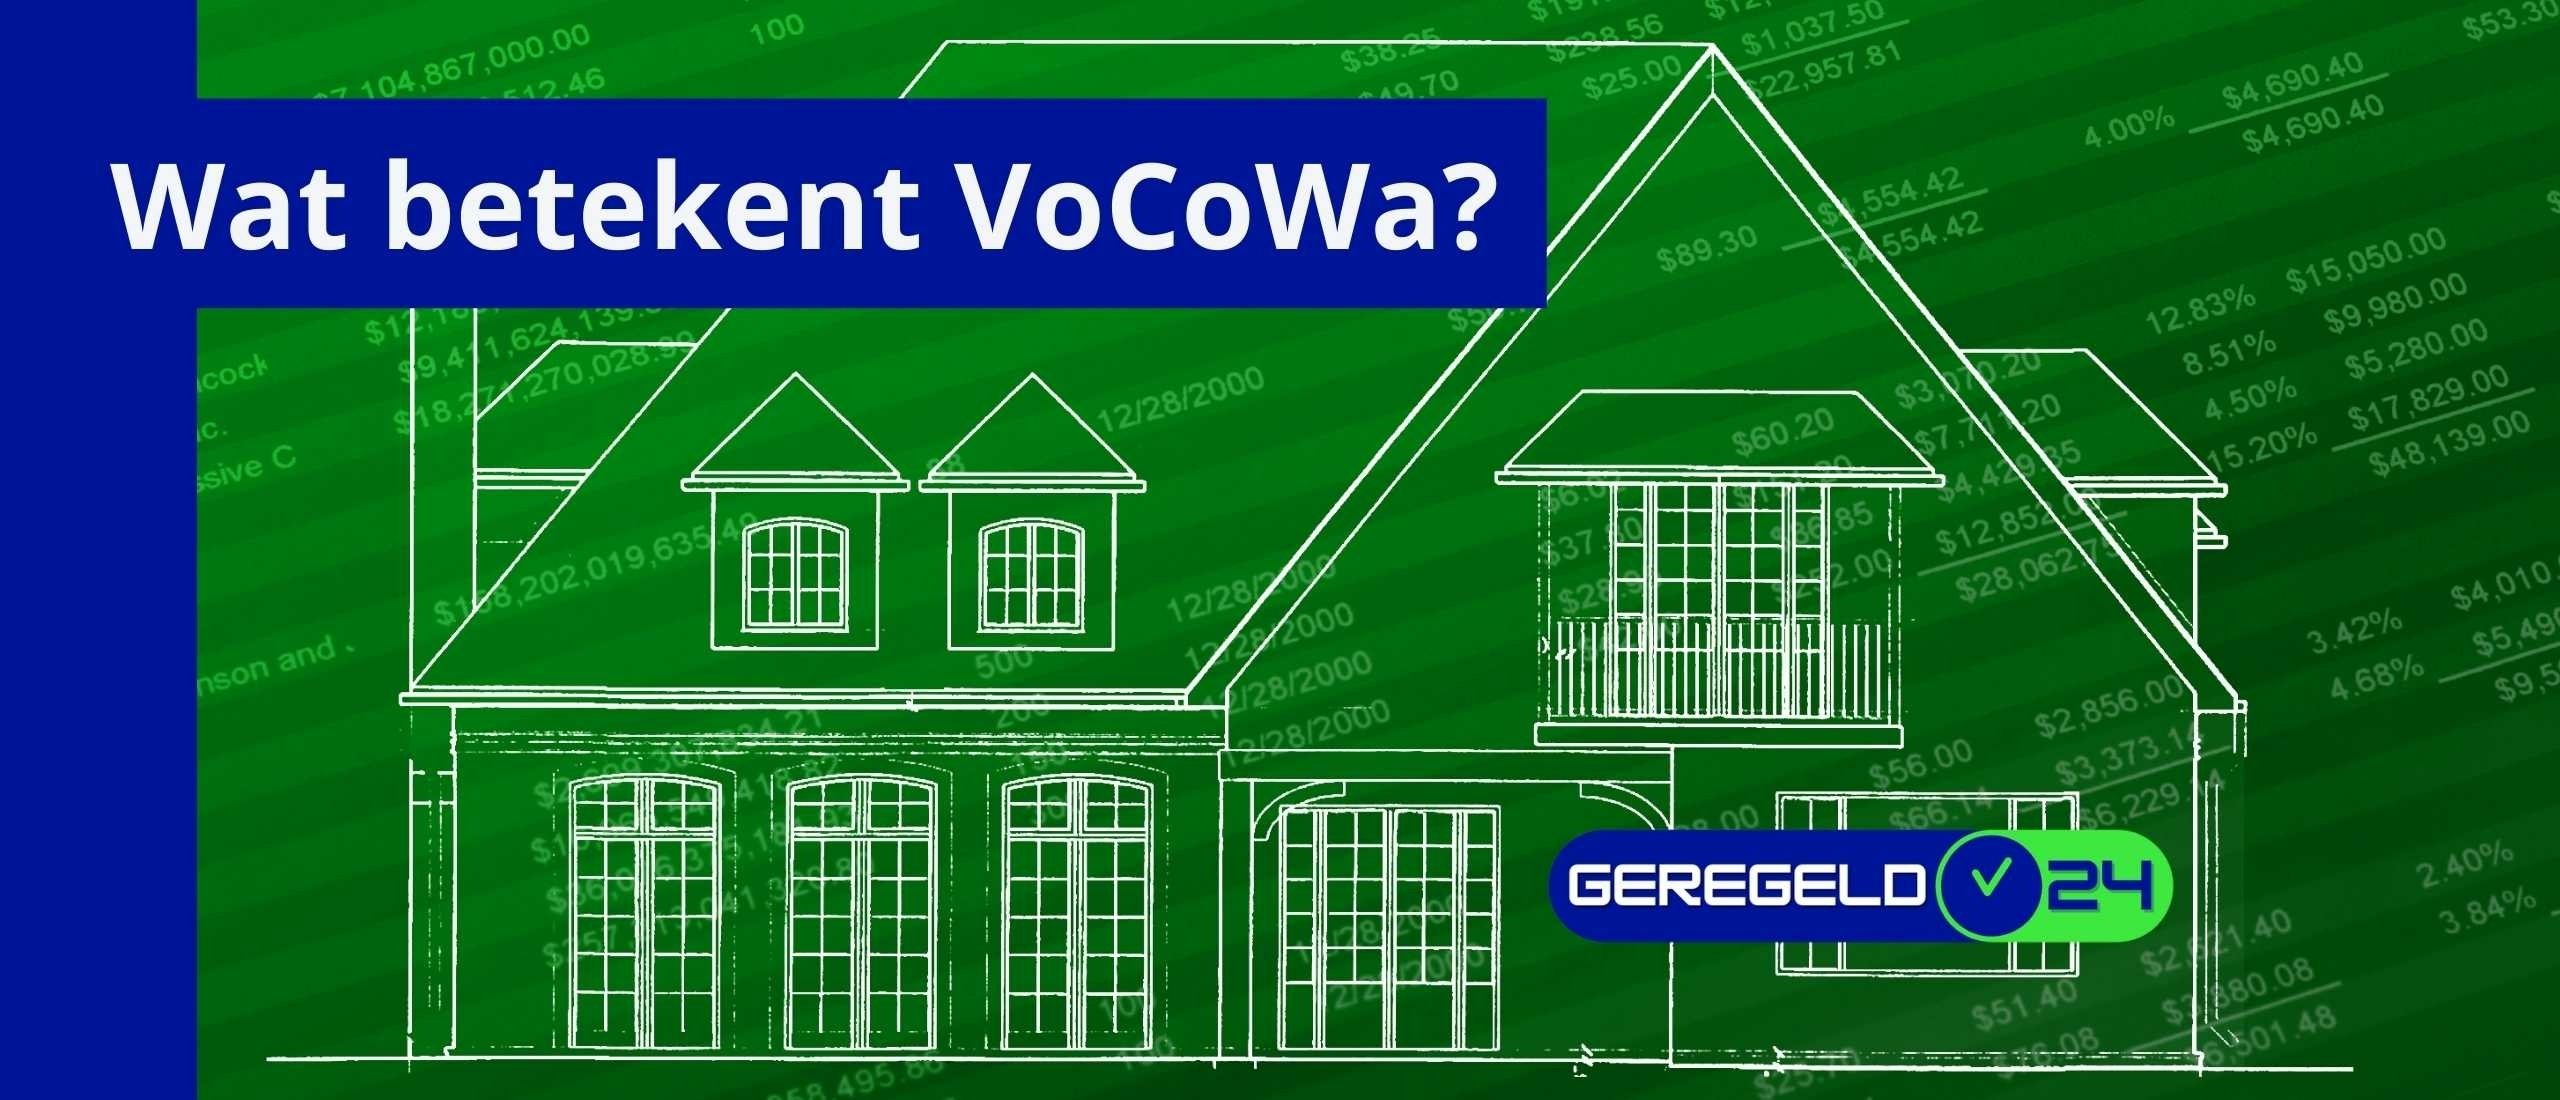 Wat betekent VoCoWa?